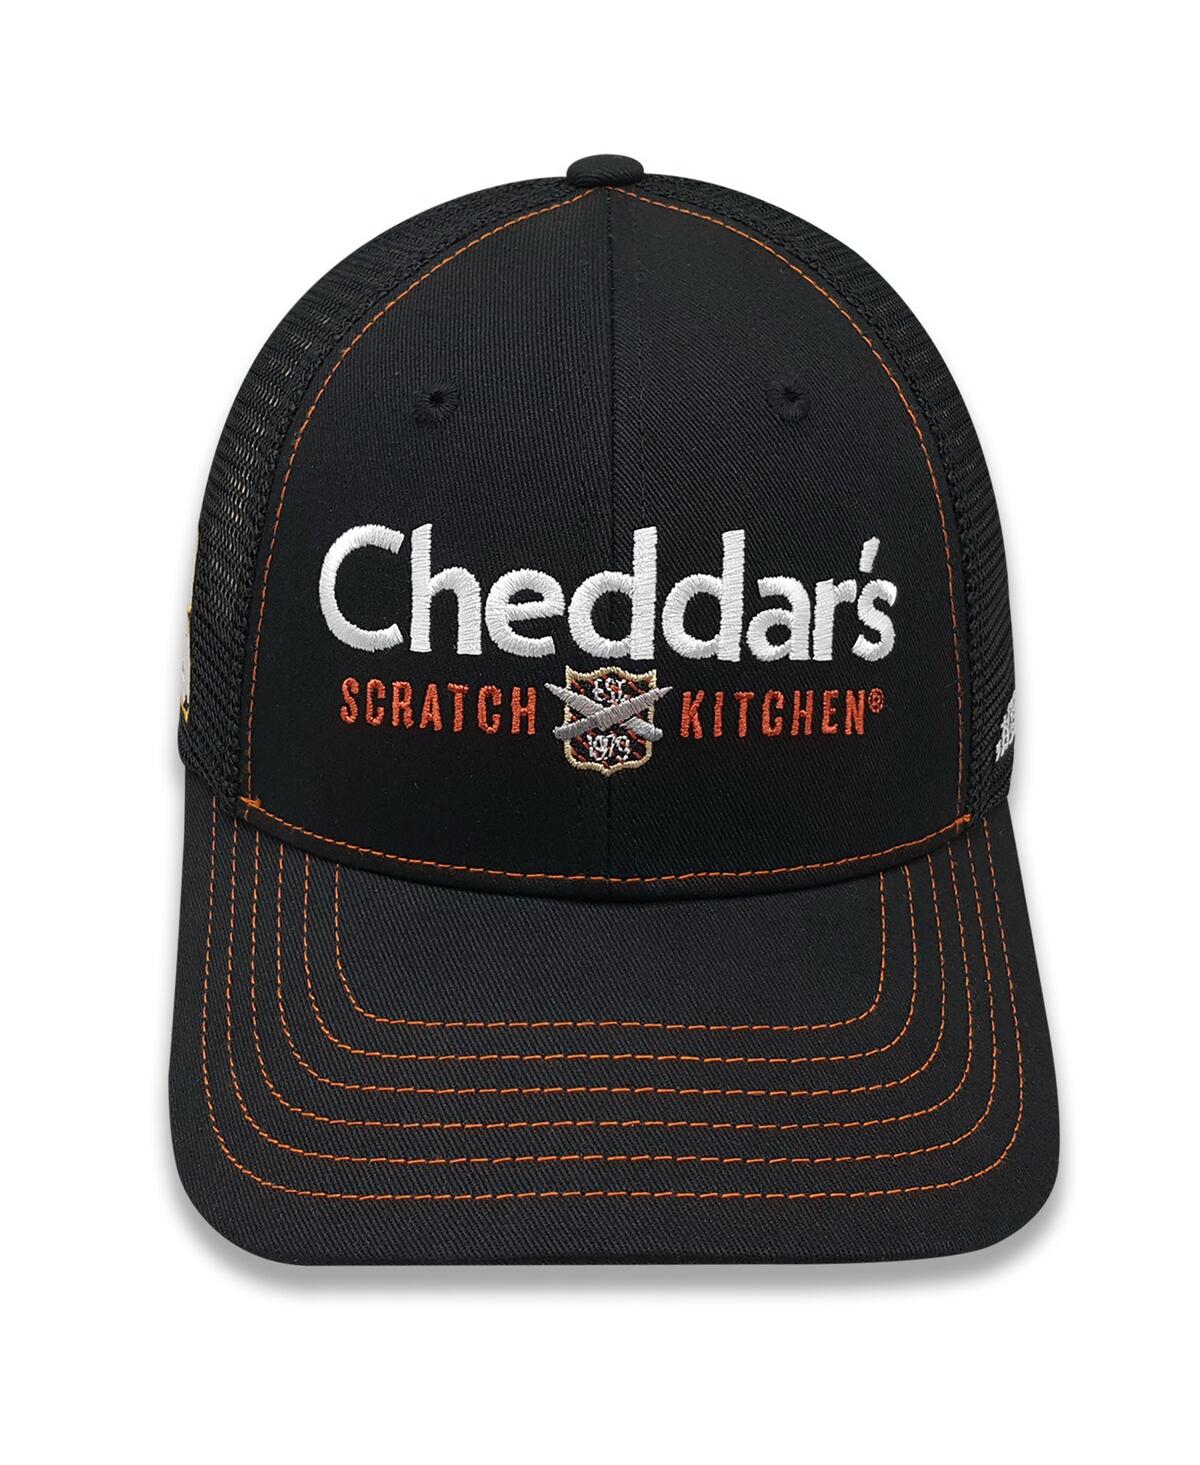 Men's Checkered Flag Sports Black Kyle Busch Cheddar's Trucker Adjustable Hat - Black